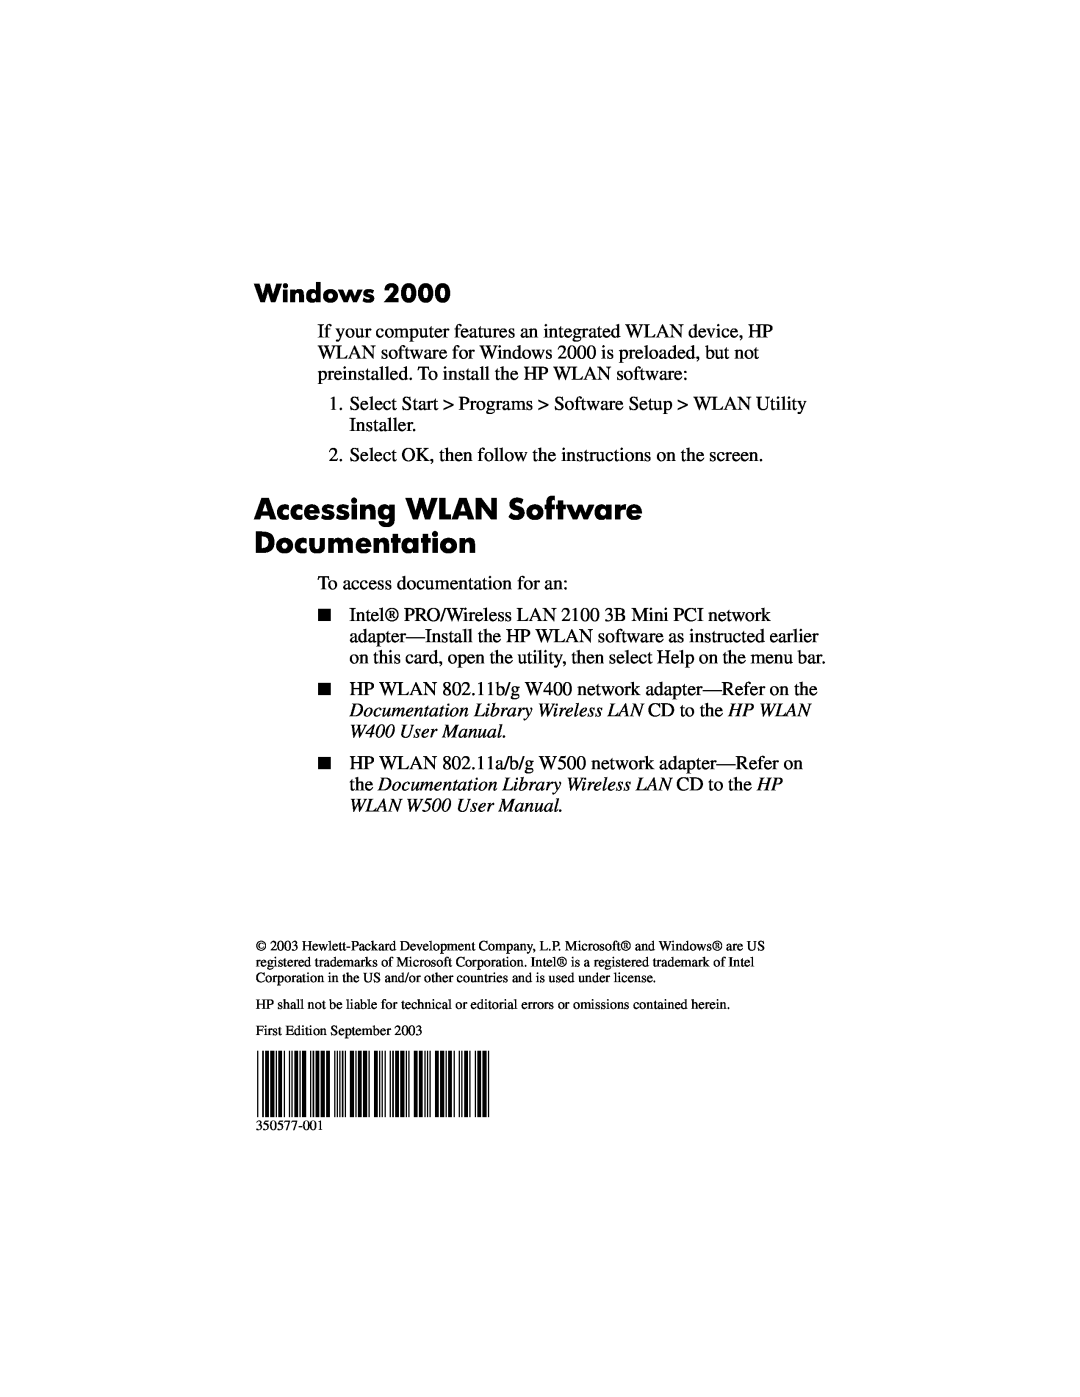 HP R3038CL, R3060US, R3050US, R3056RS, R3001, R3000 (AMD), R3002, R3003XX, R3030US Accessing WLAN Software Documentation, Windows 